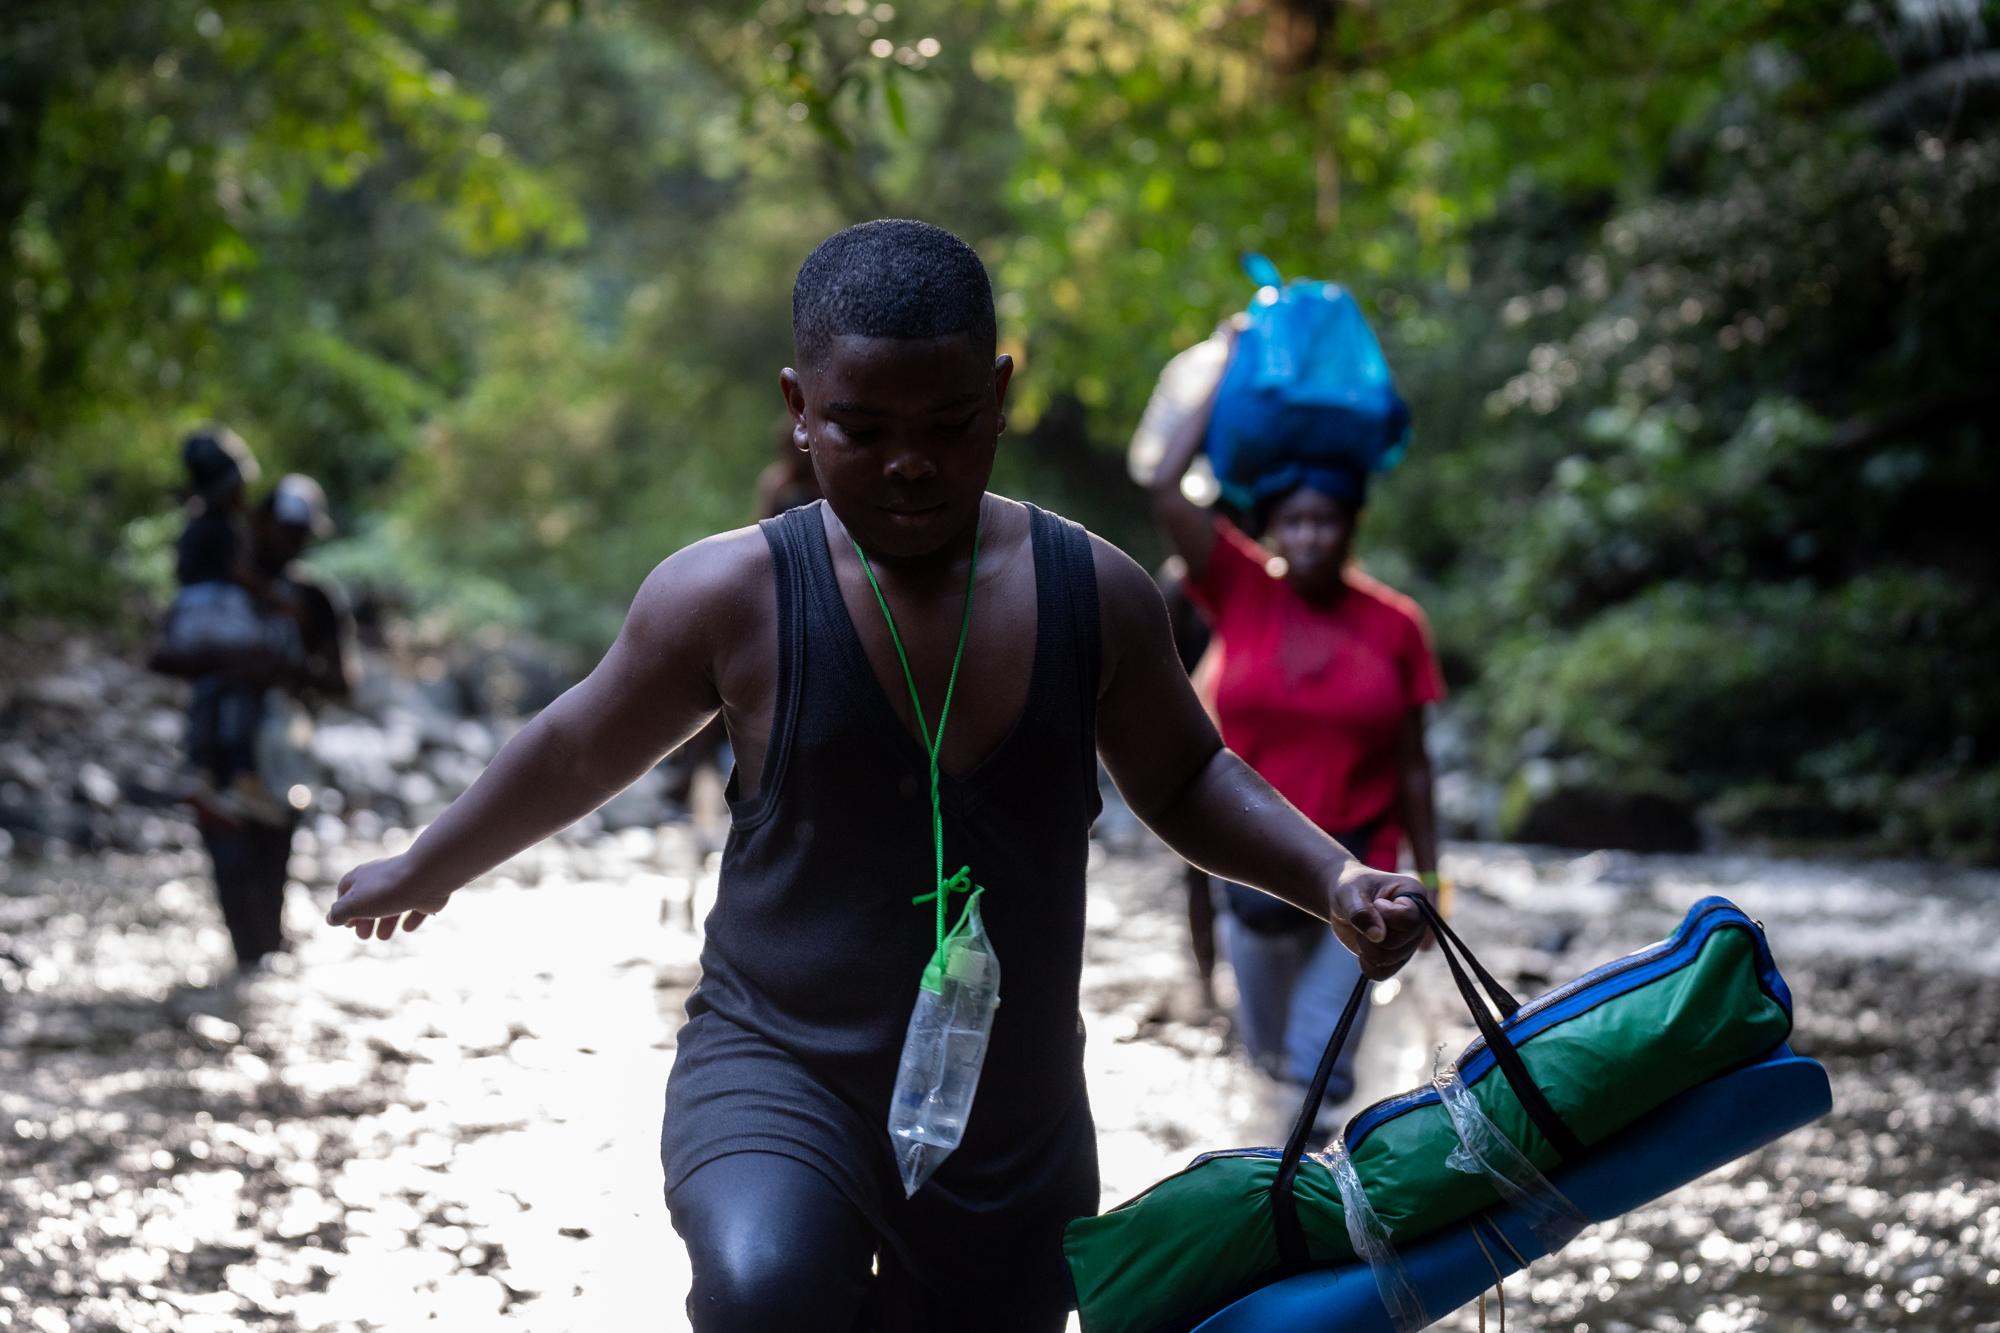 Inside The Derian Gap - A young boy walks through a shallow river inside the...